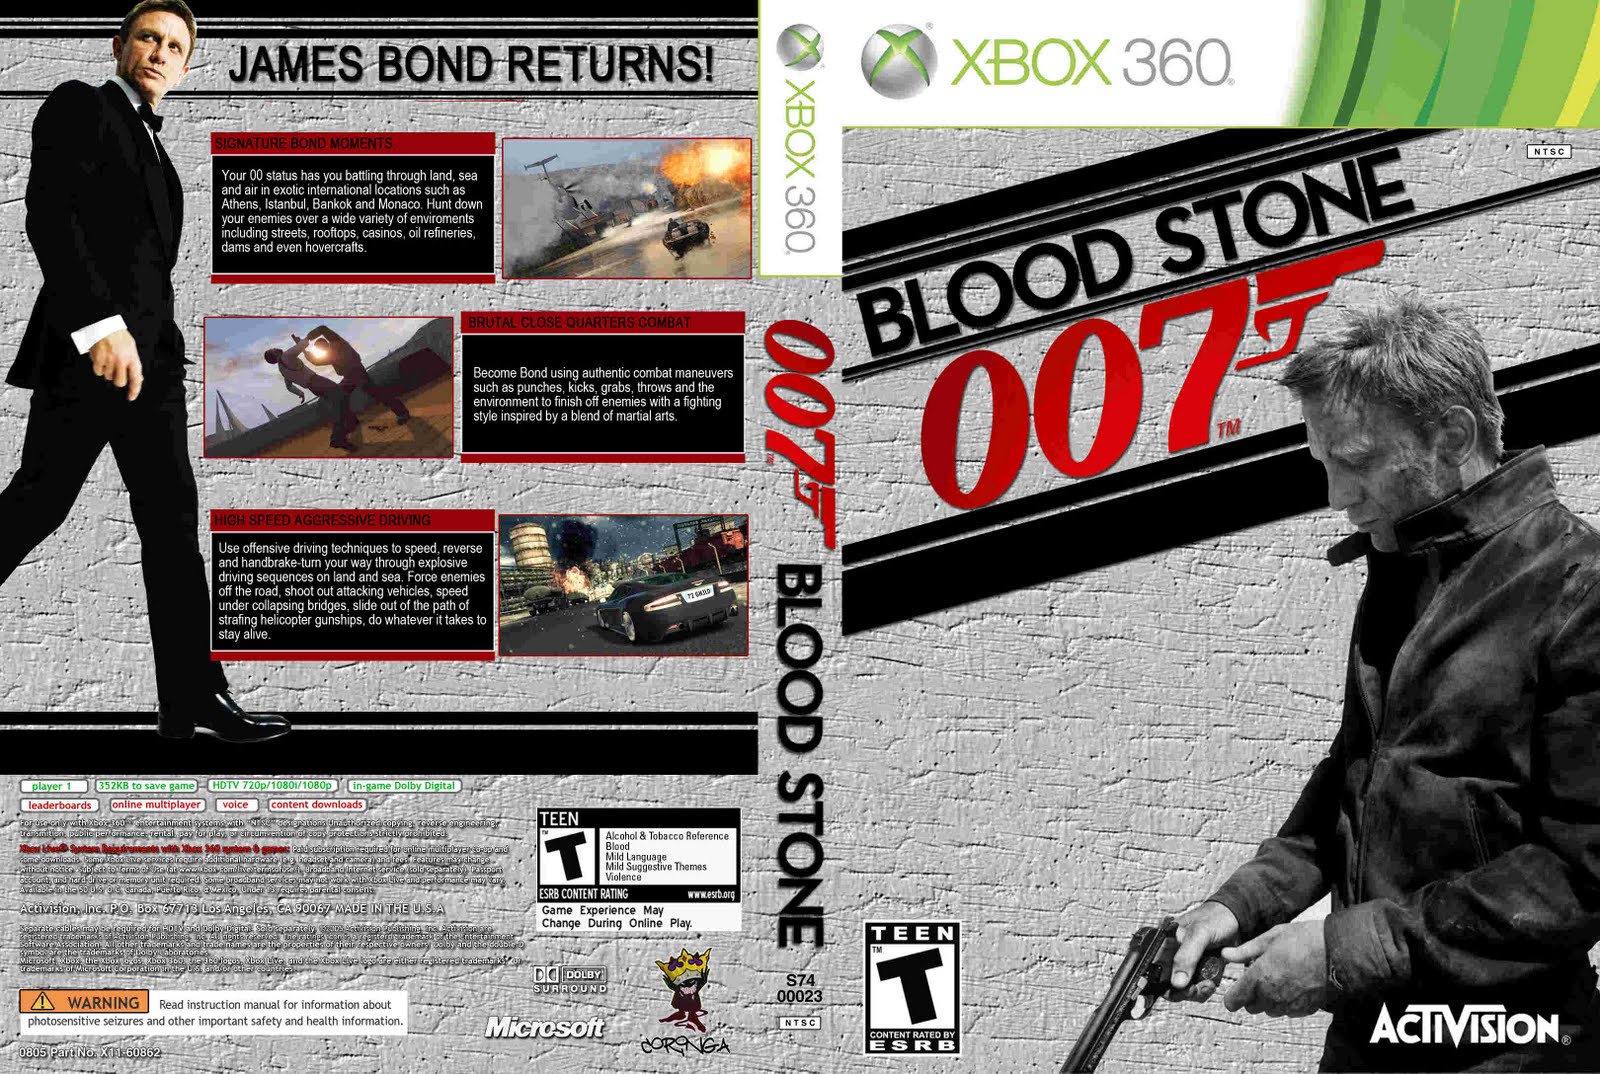 james bond 007 blood stone pc game crack